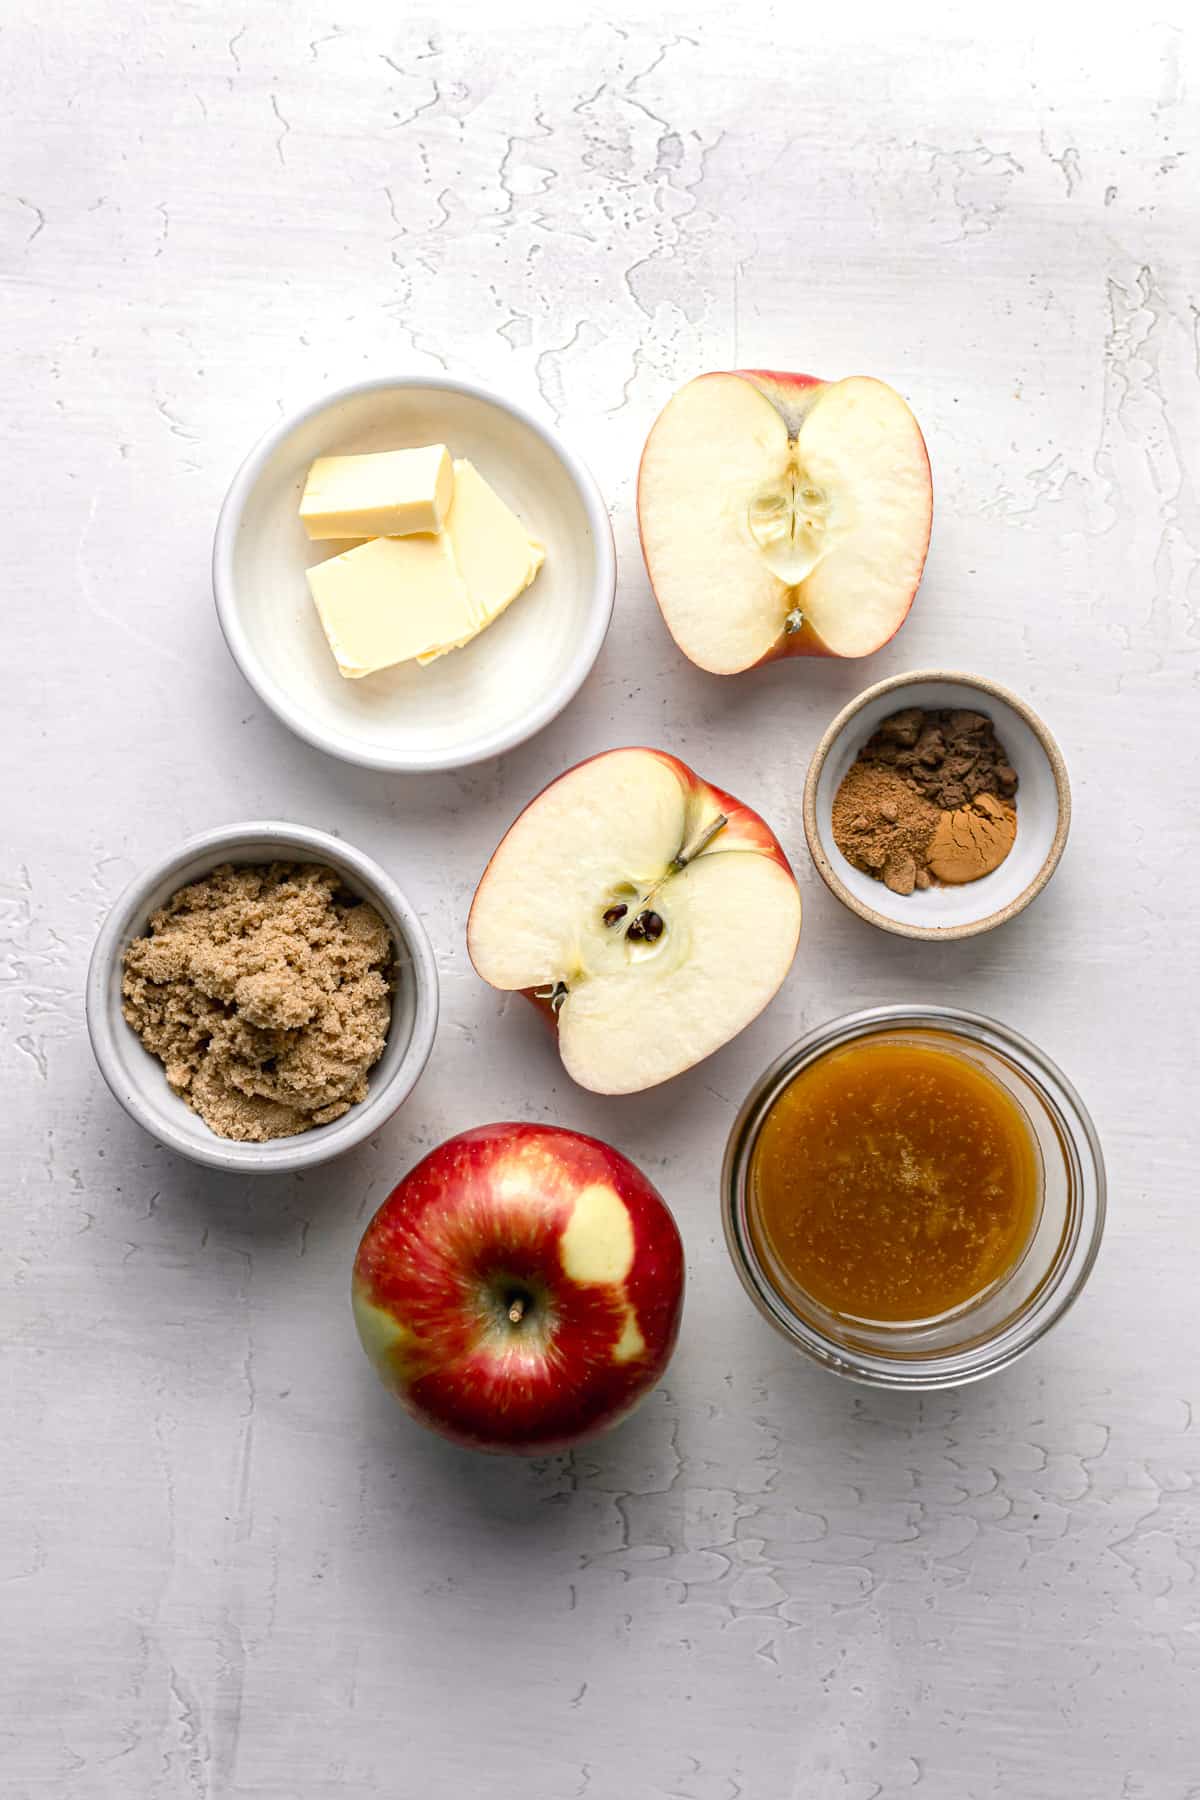 ingredients for spiced caramel apples.